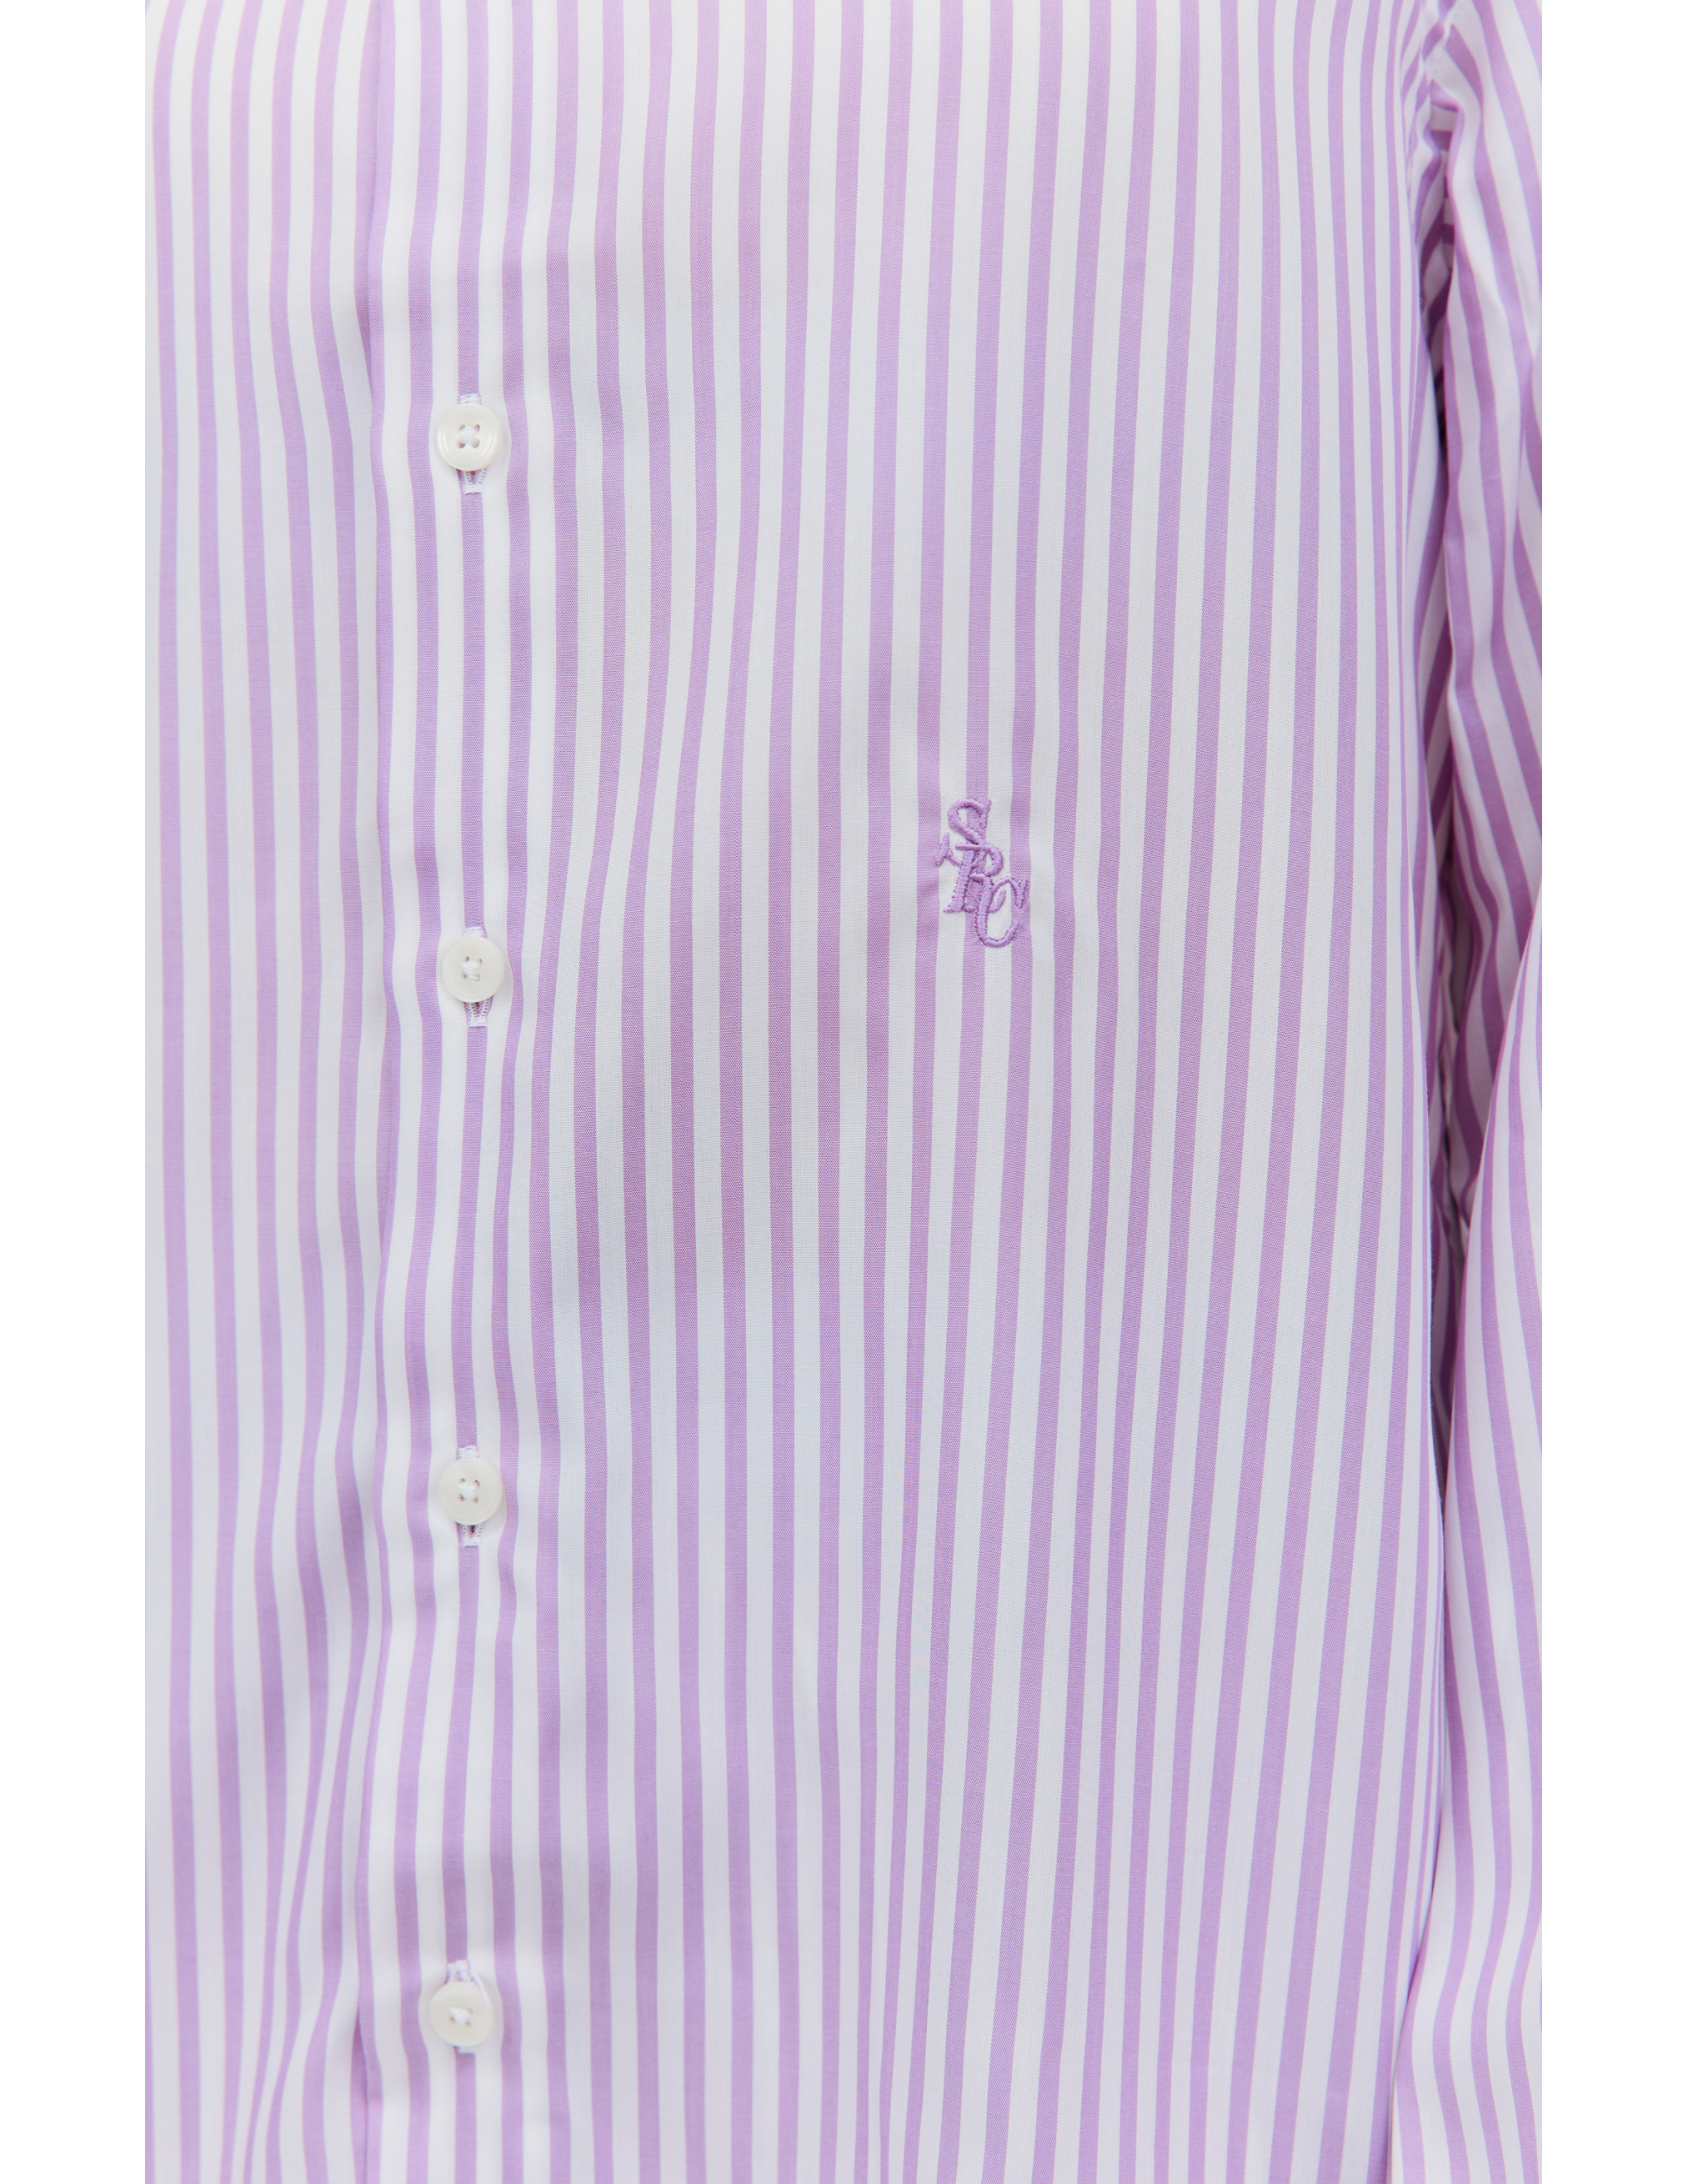 Рубашка в полоску с вышитым логитом SPORTY & RICH ST1011LI, размер S;M;L;XL - фото 4